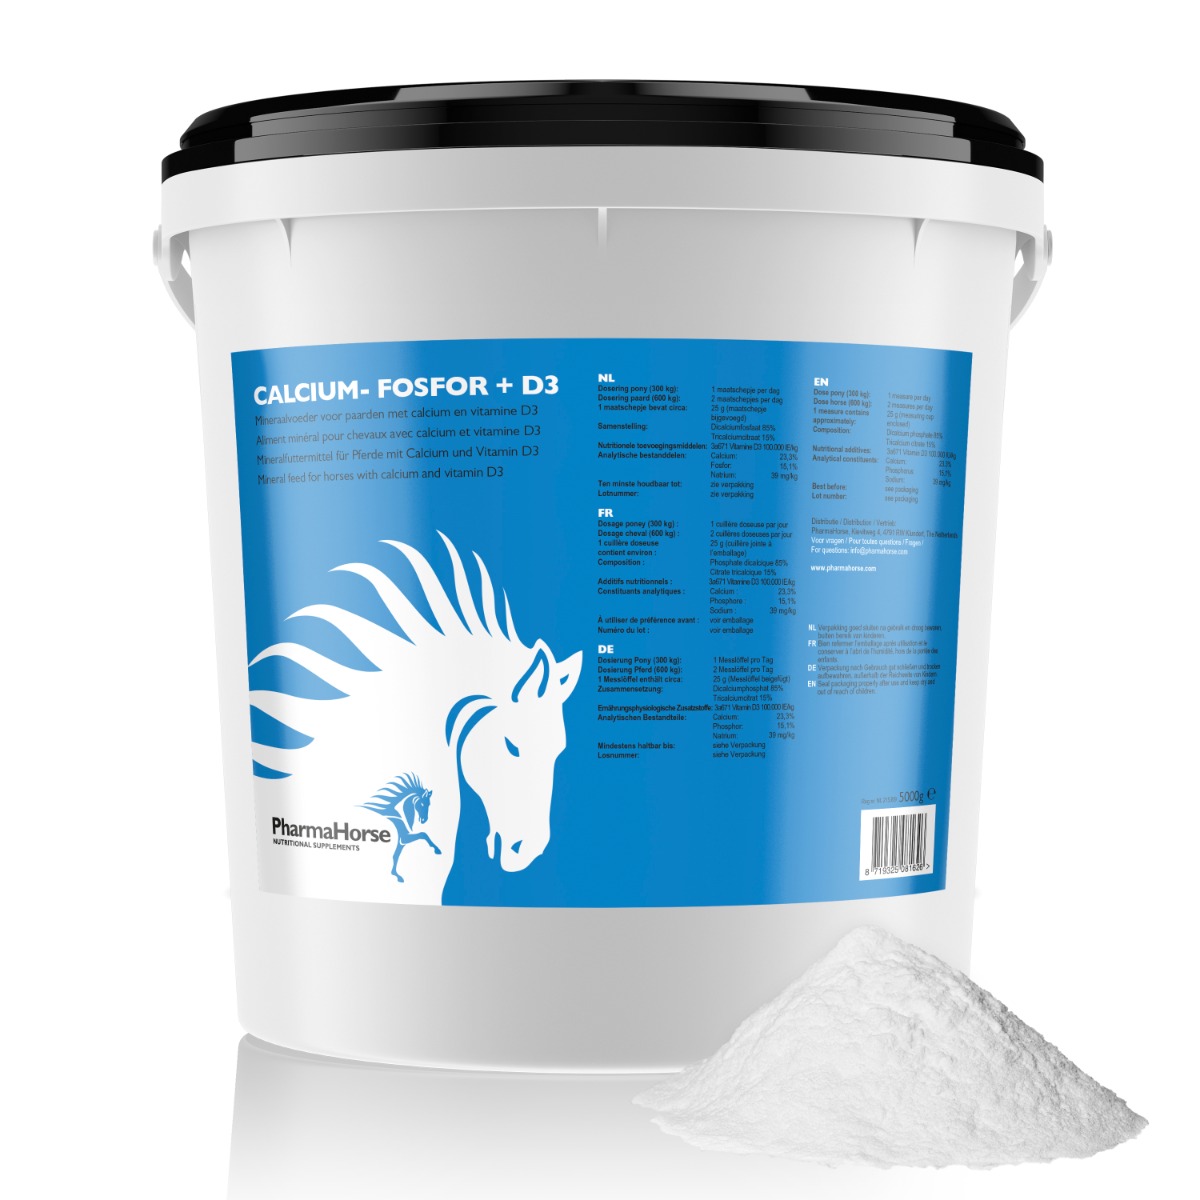 Calcium fosfor + D3 paard 5000 gram